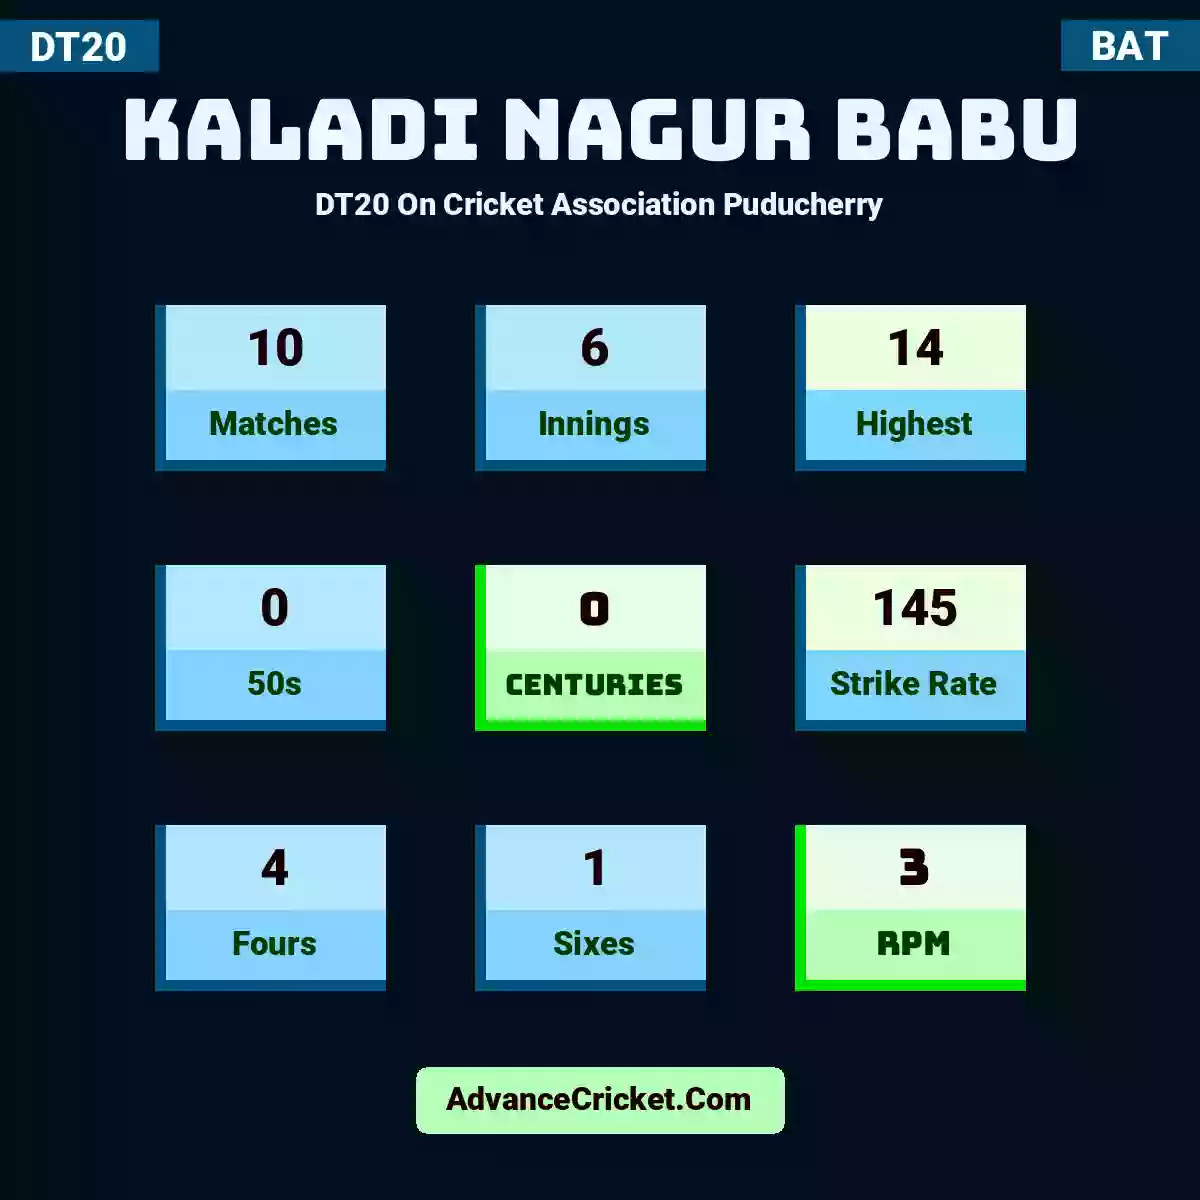 Kaladi Nagur Babu DT20  On Cricket Association Puducherry, Kaladi Nagur Babu played 10 matches, scored 14 runs as highest, 0 half-centuries, and 0 centuries, with a strike rate of 145. K.Babu hit 4 fours and 1 sixes, with an RPM of 3.